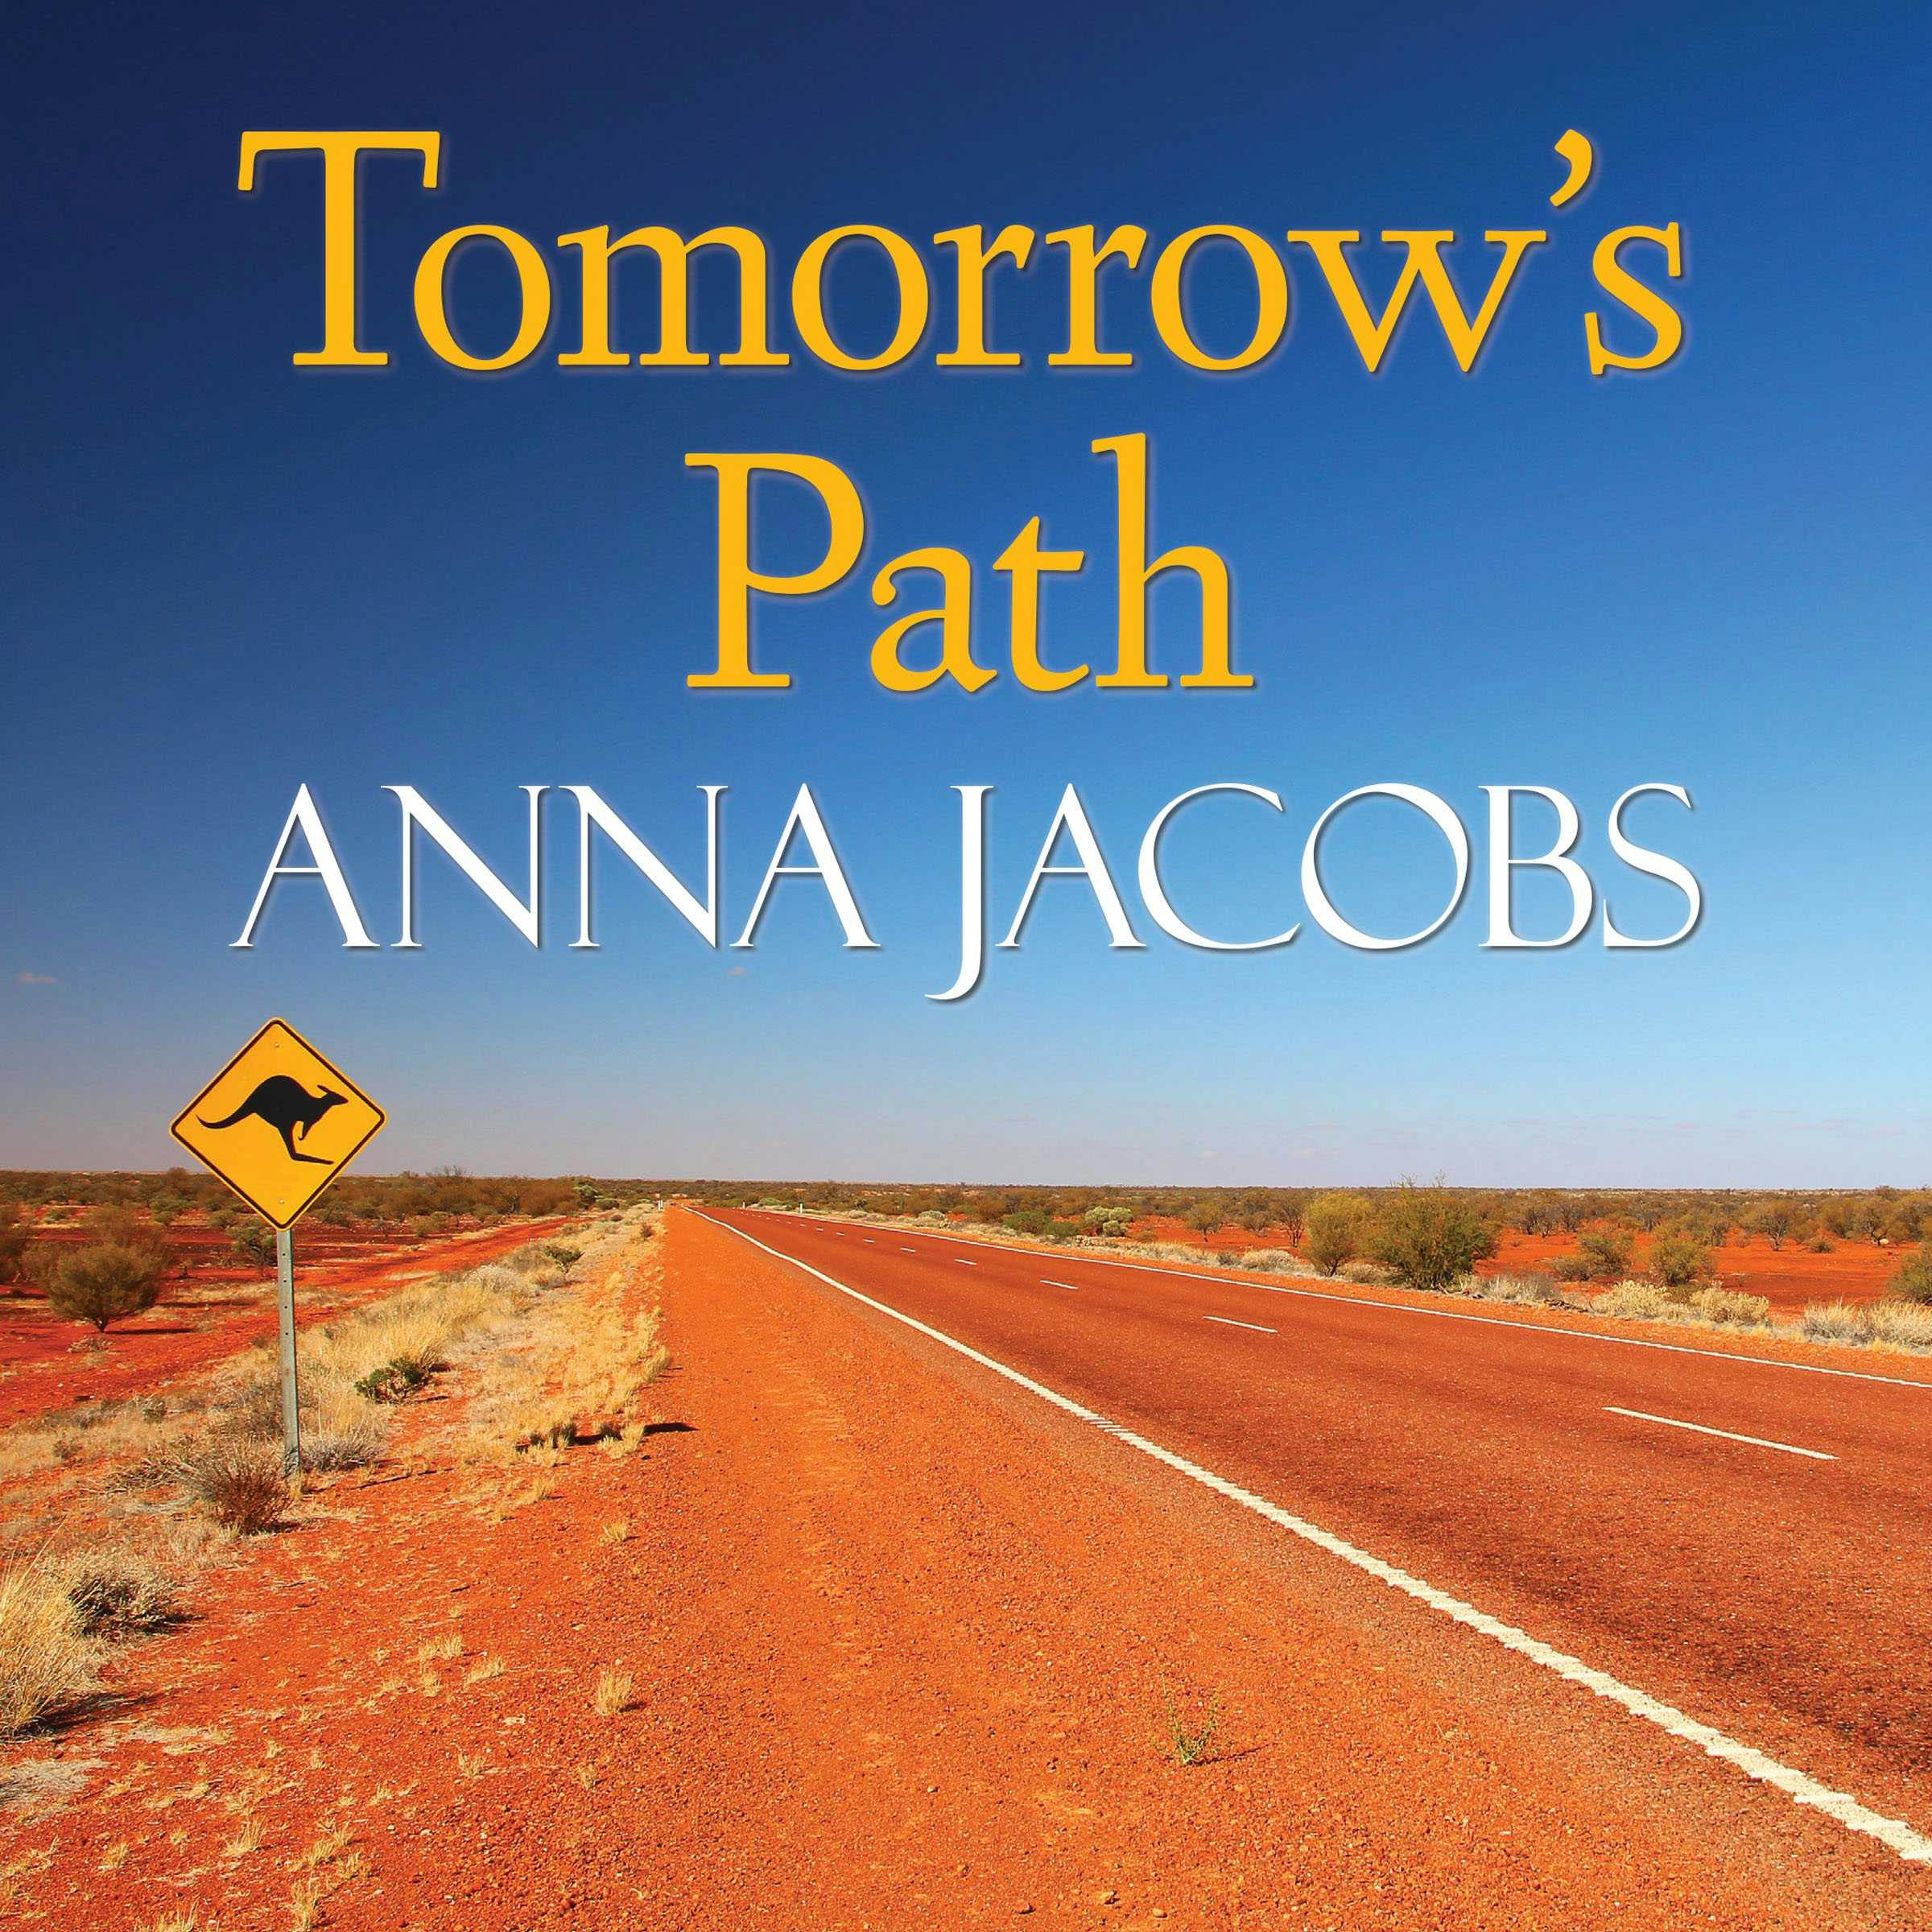 Tomorrow's Path - Anna Jacobs